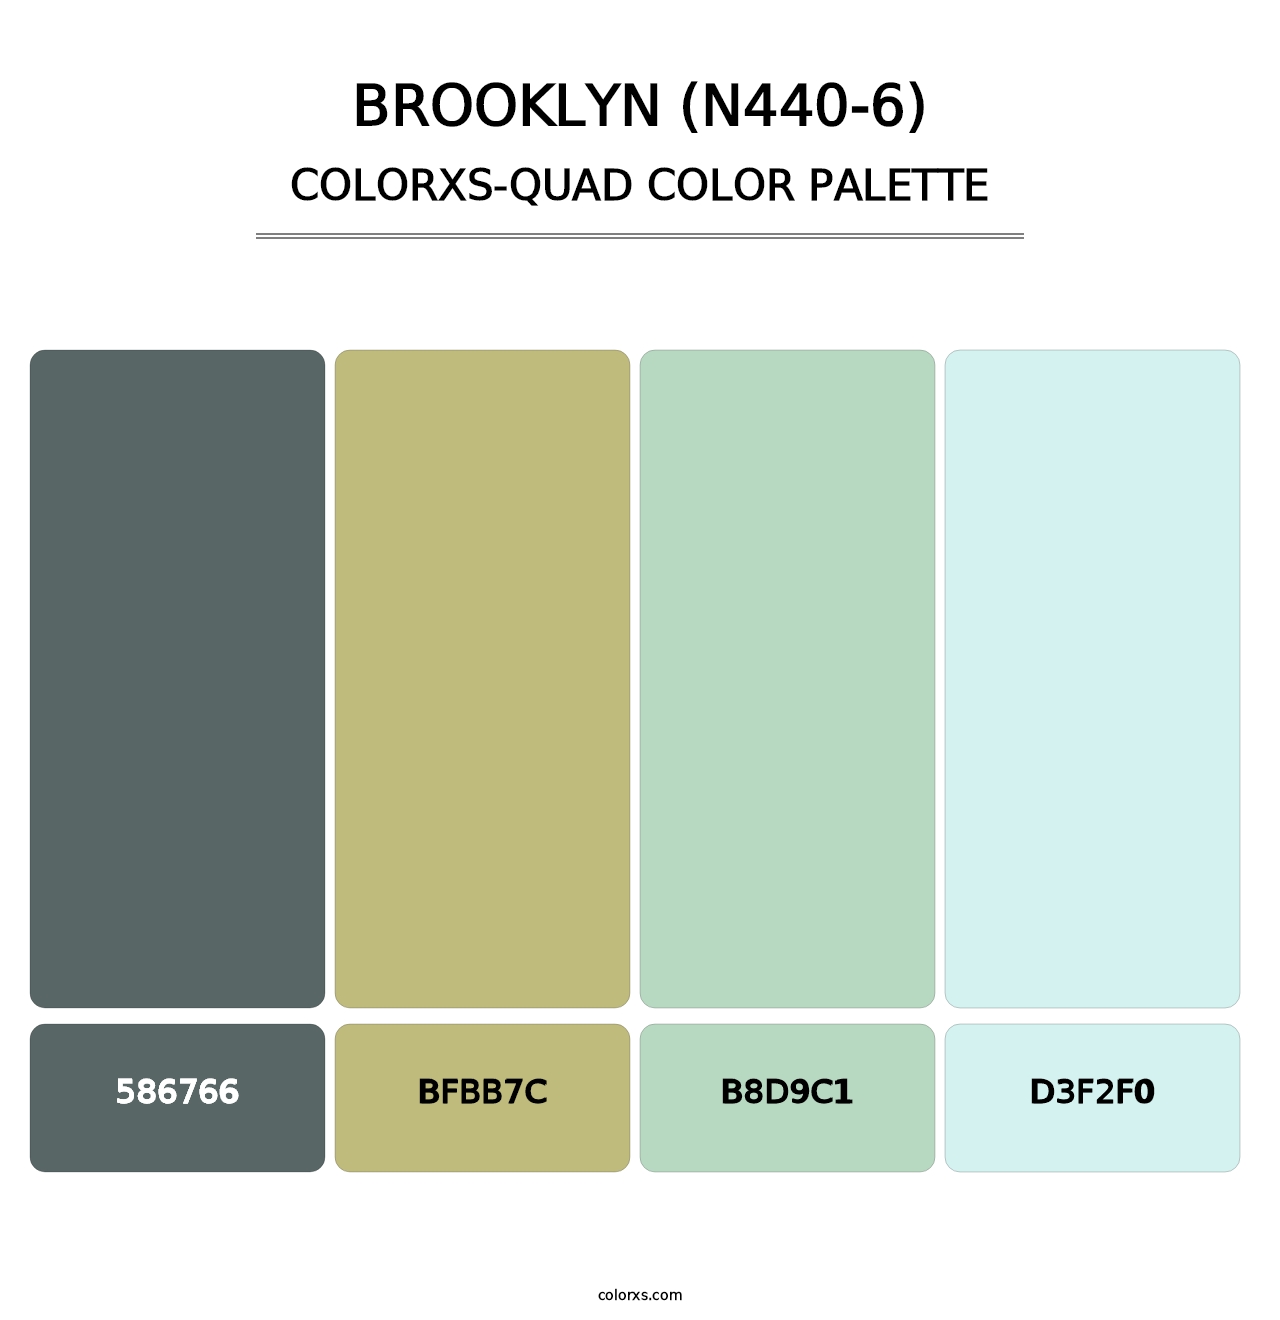 Brooklyn (N440-6) - Colorxs Quad Palette